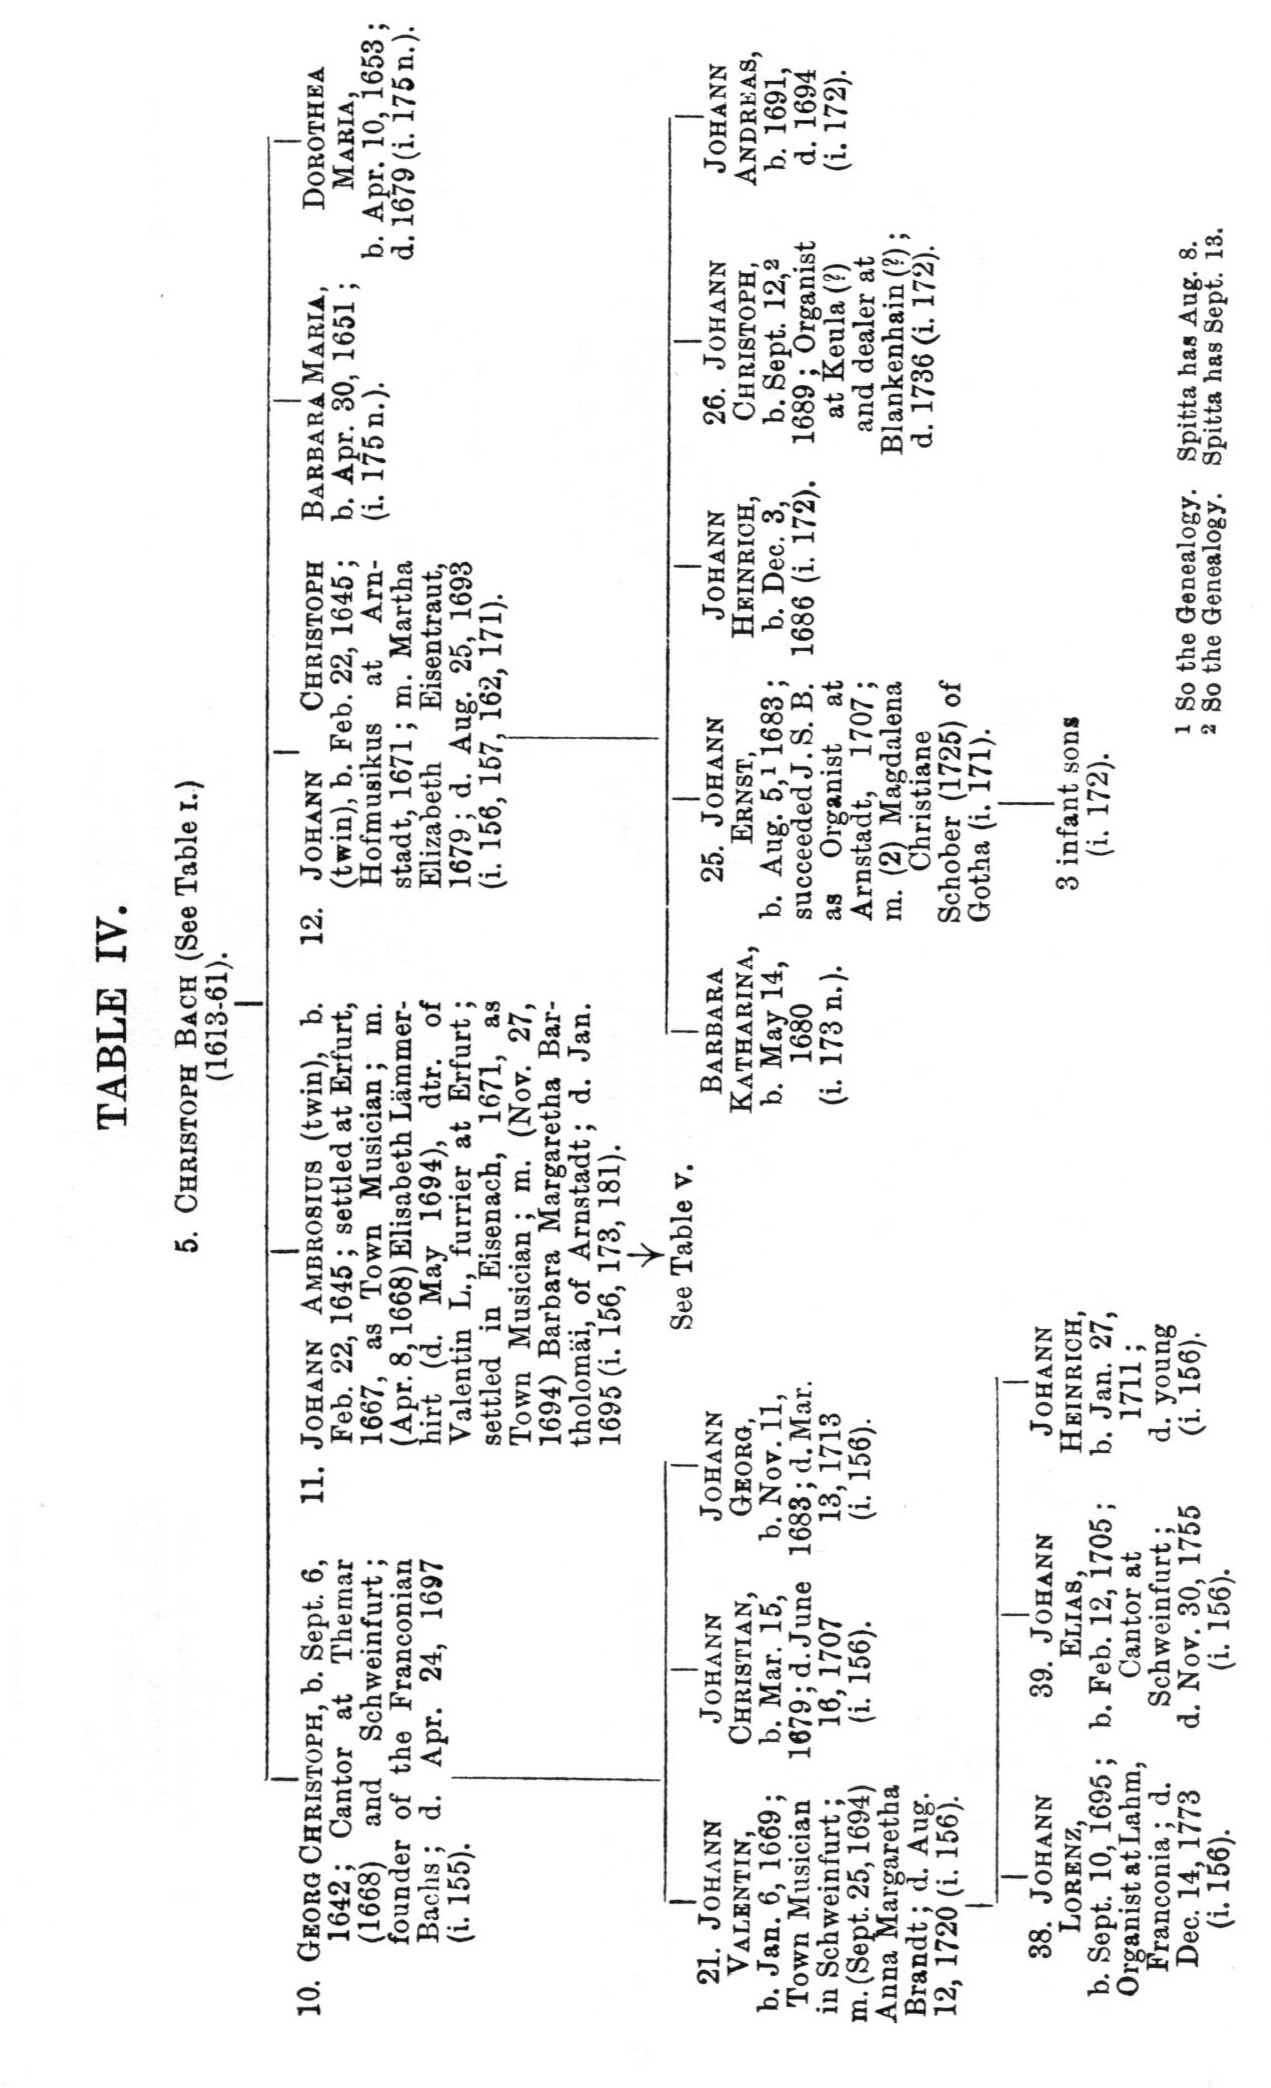 Genealogy Table, p. 306